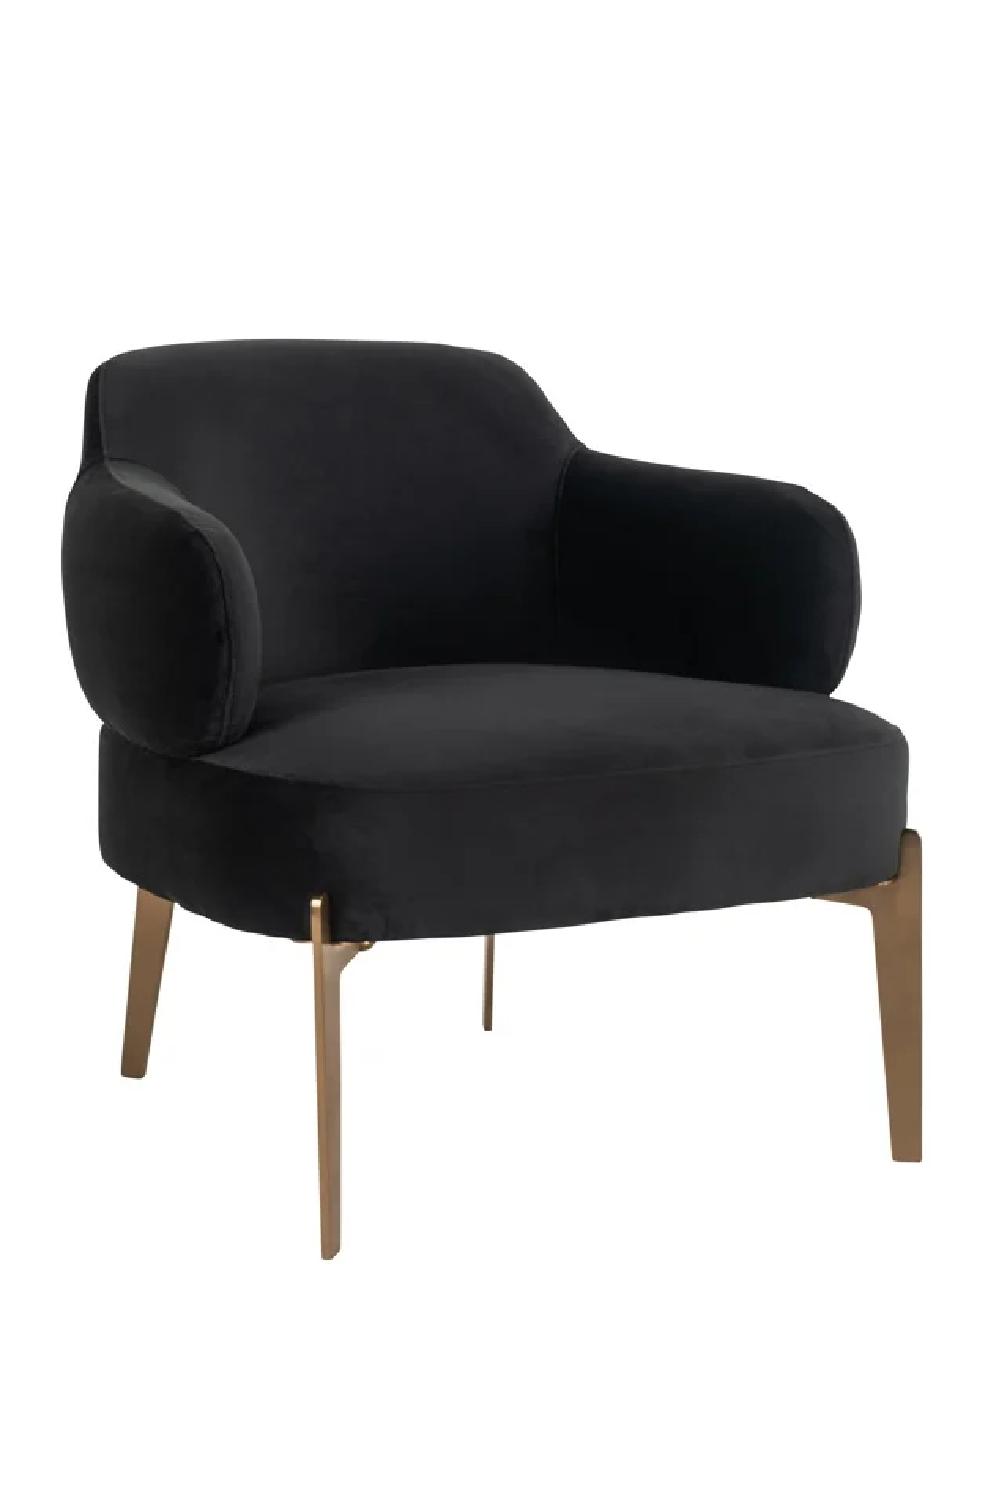 Modern Lounge Chair | OROA Venus | Oroa.com